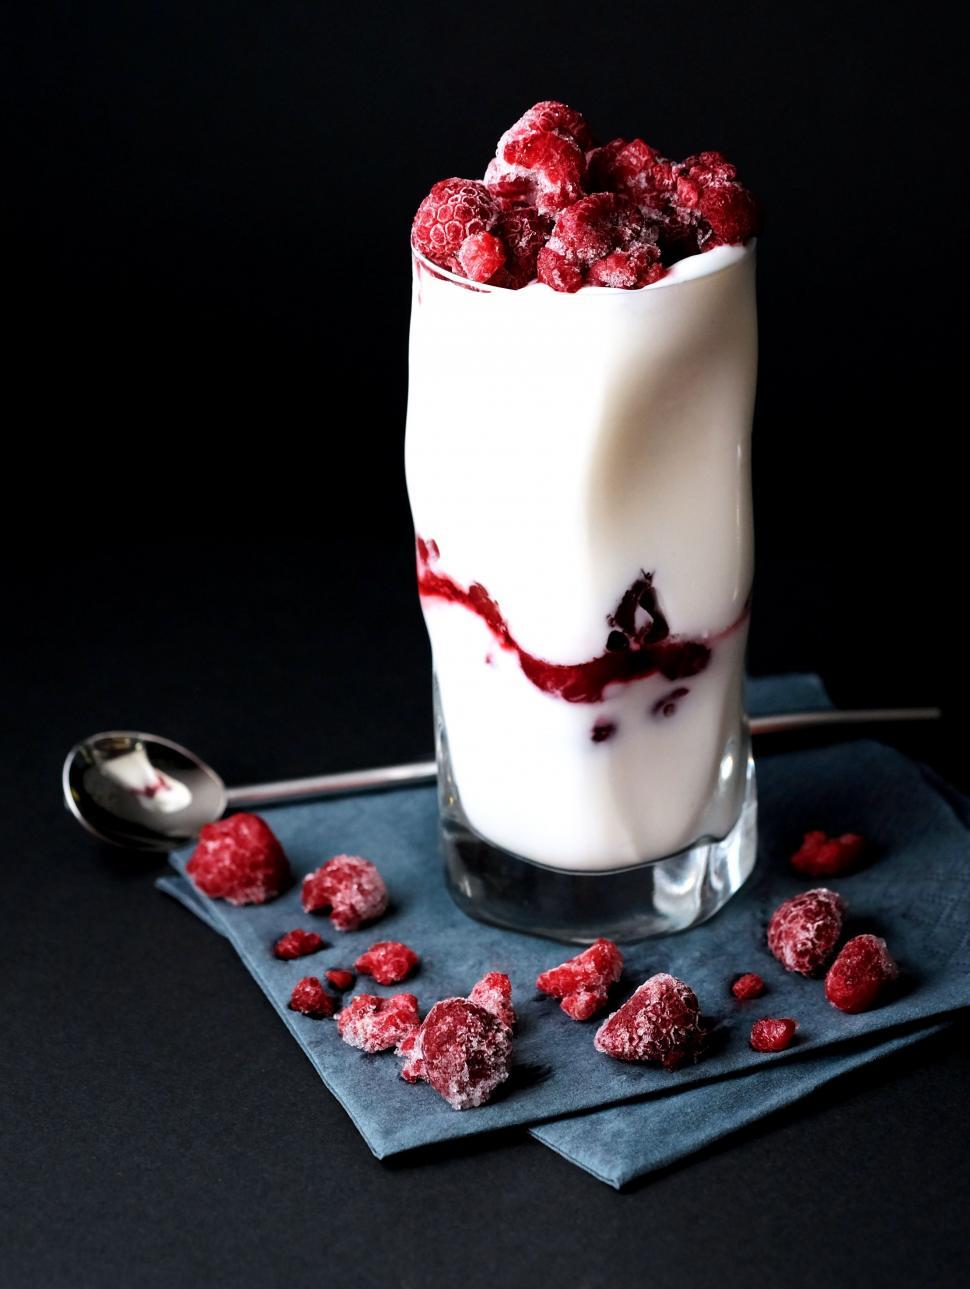 Free Image of Raspberry yogurt 